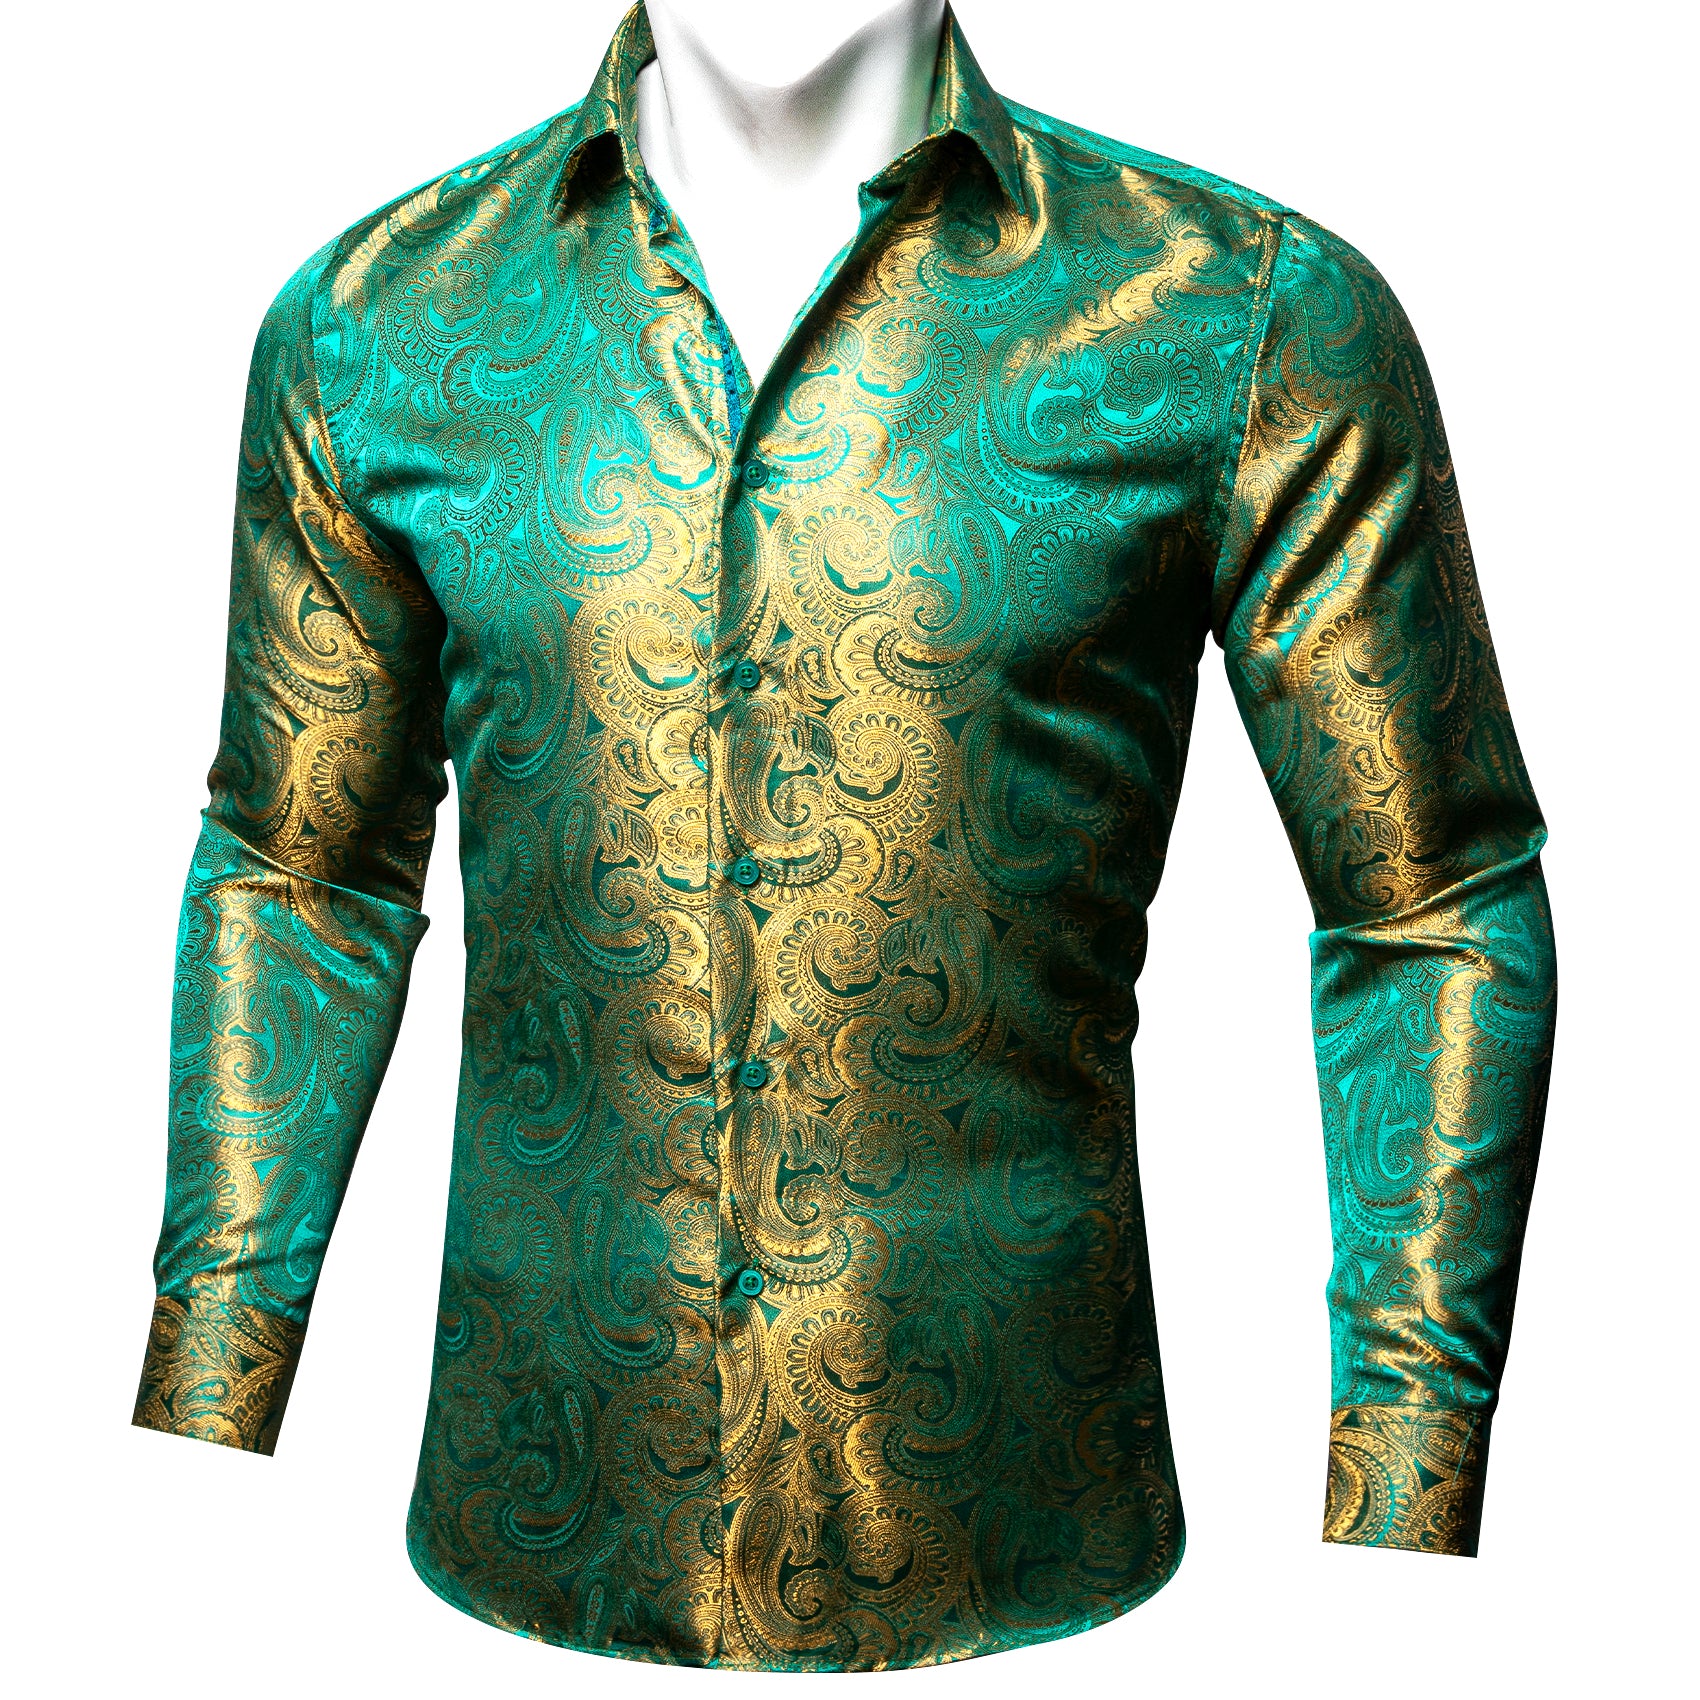 dress shirts Green shirt gold jacquard paisley shirts 